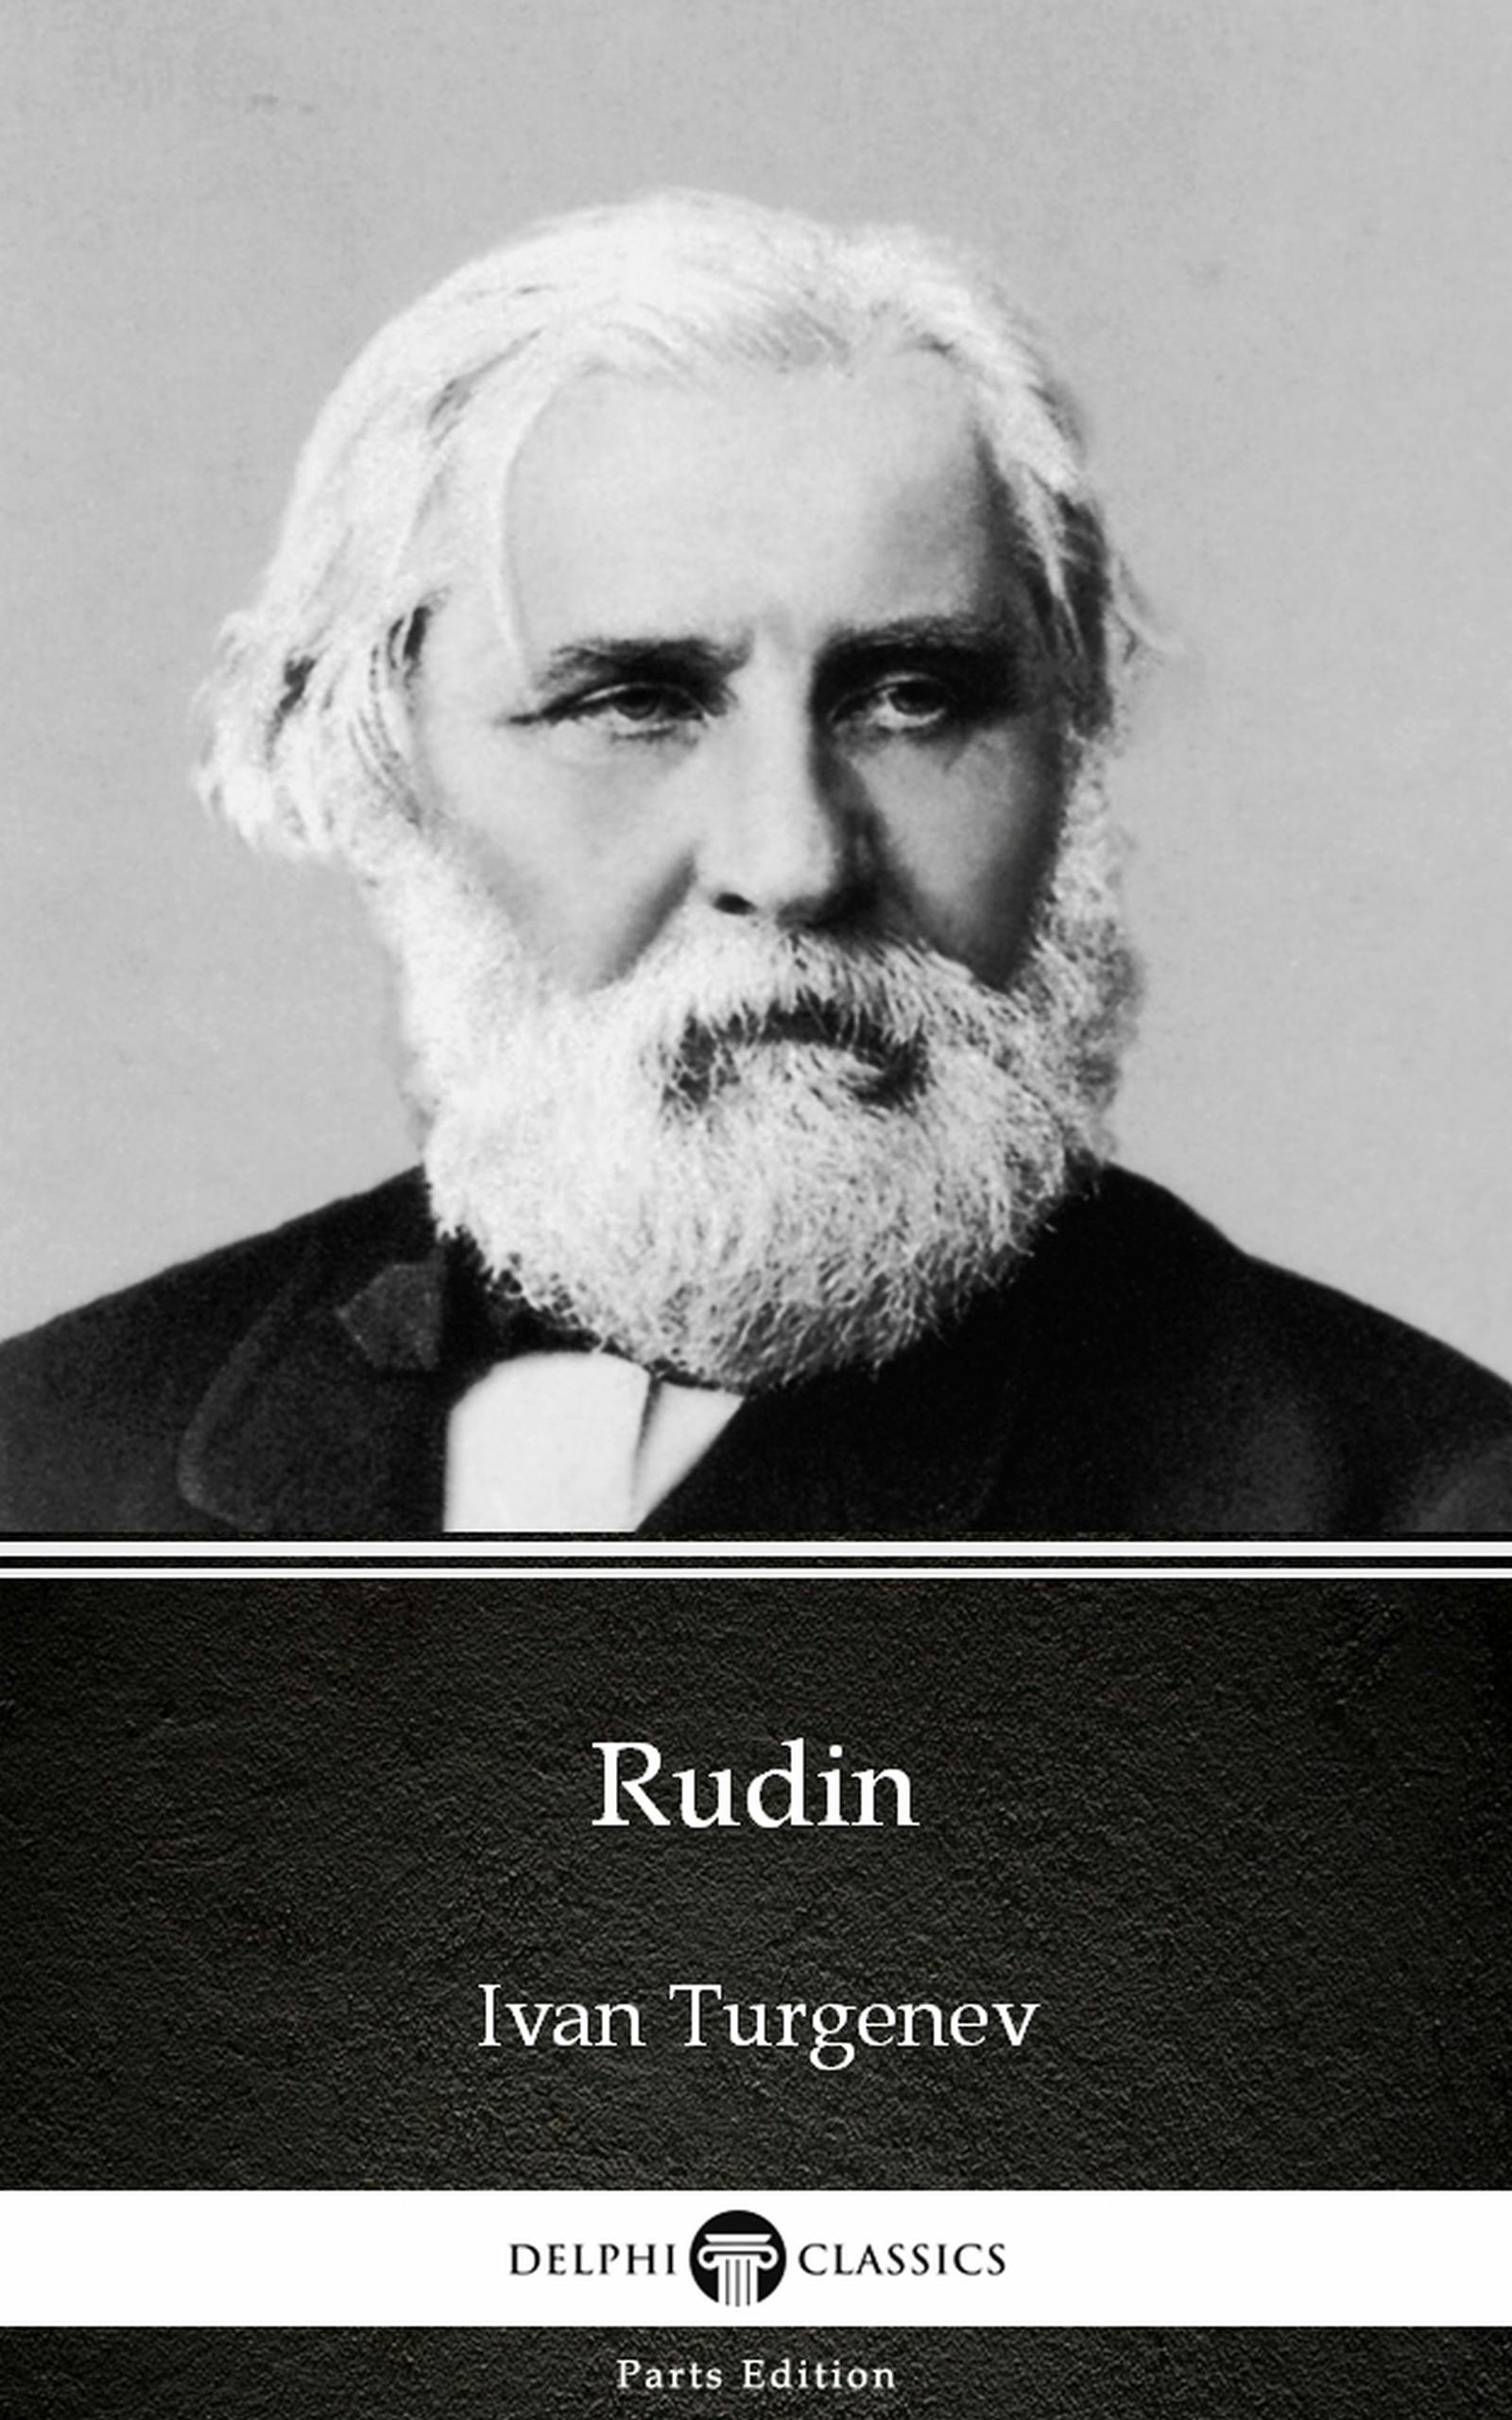 Rudin by Ivan Turgenev - Delphi Classics (Illustrated) - undefined